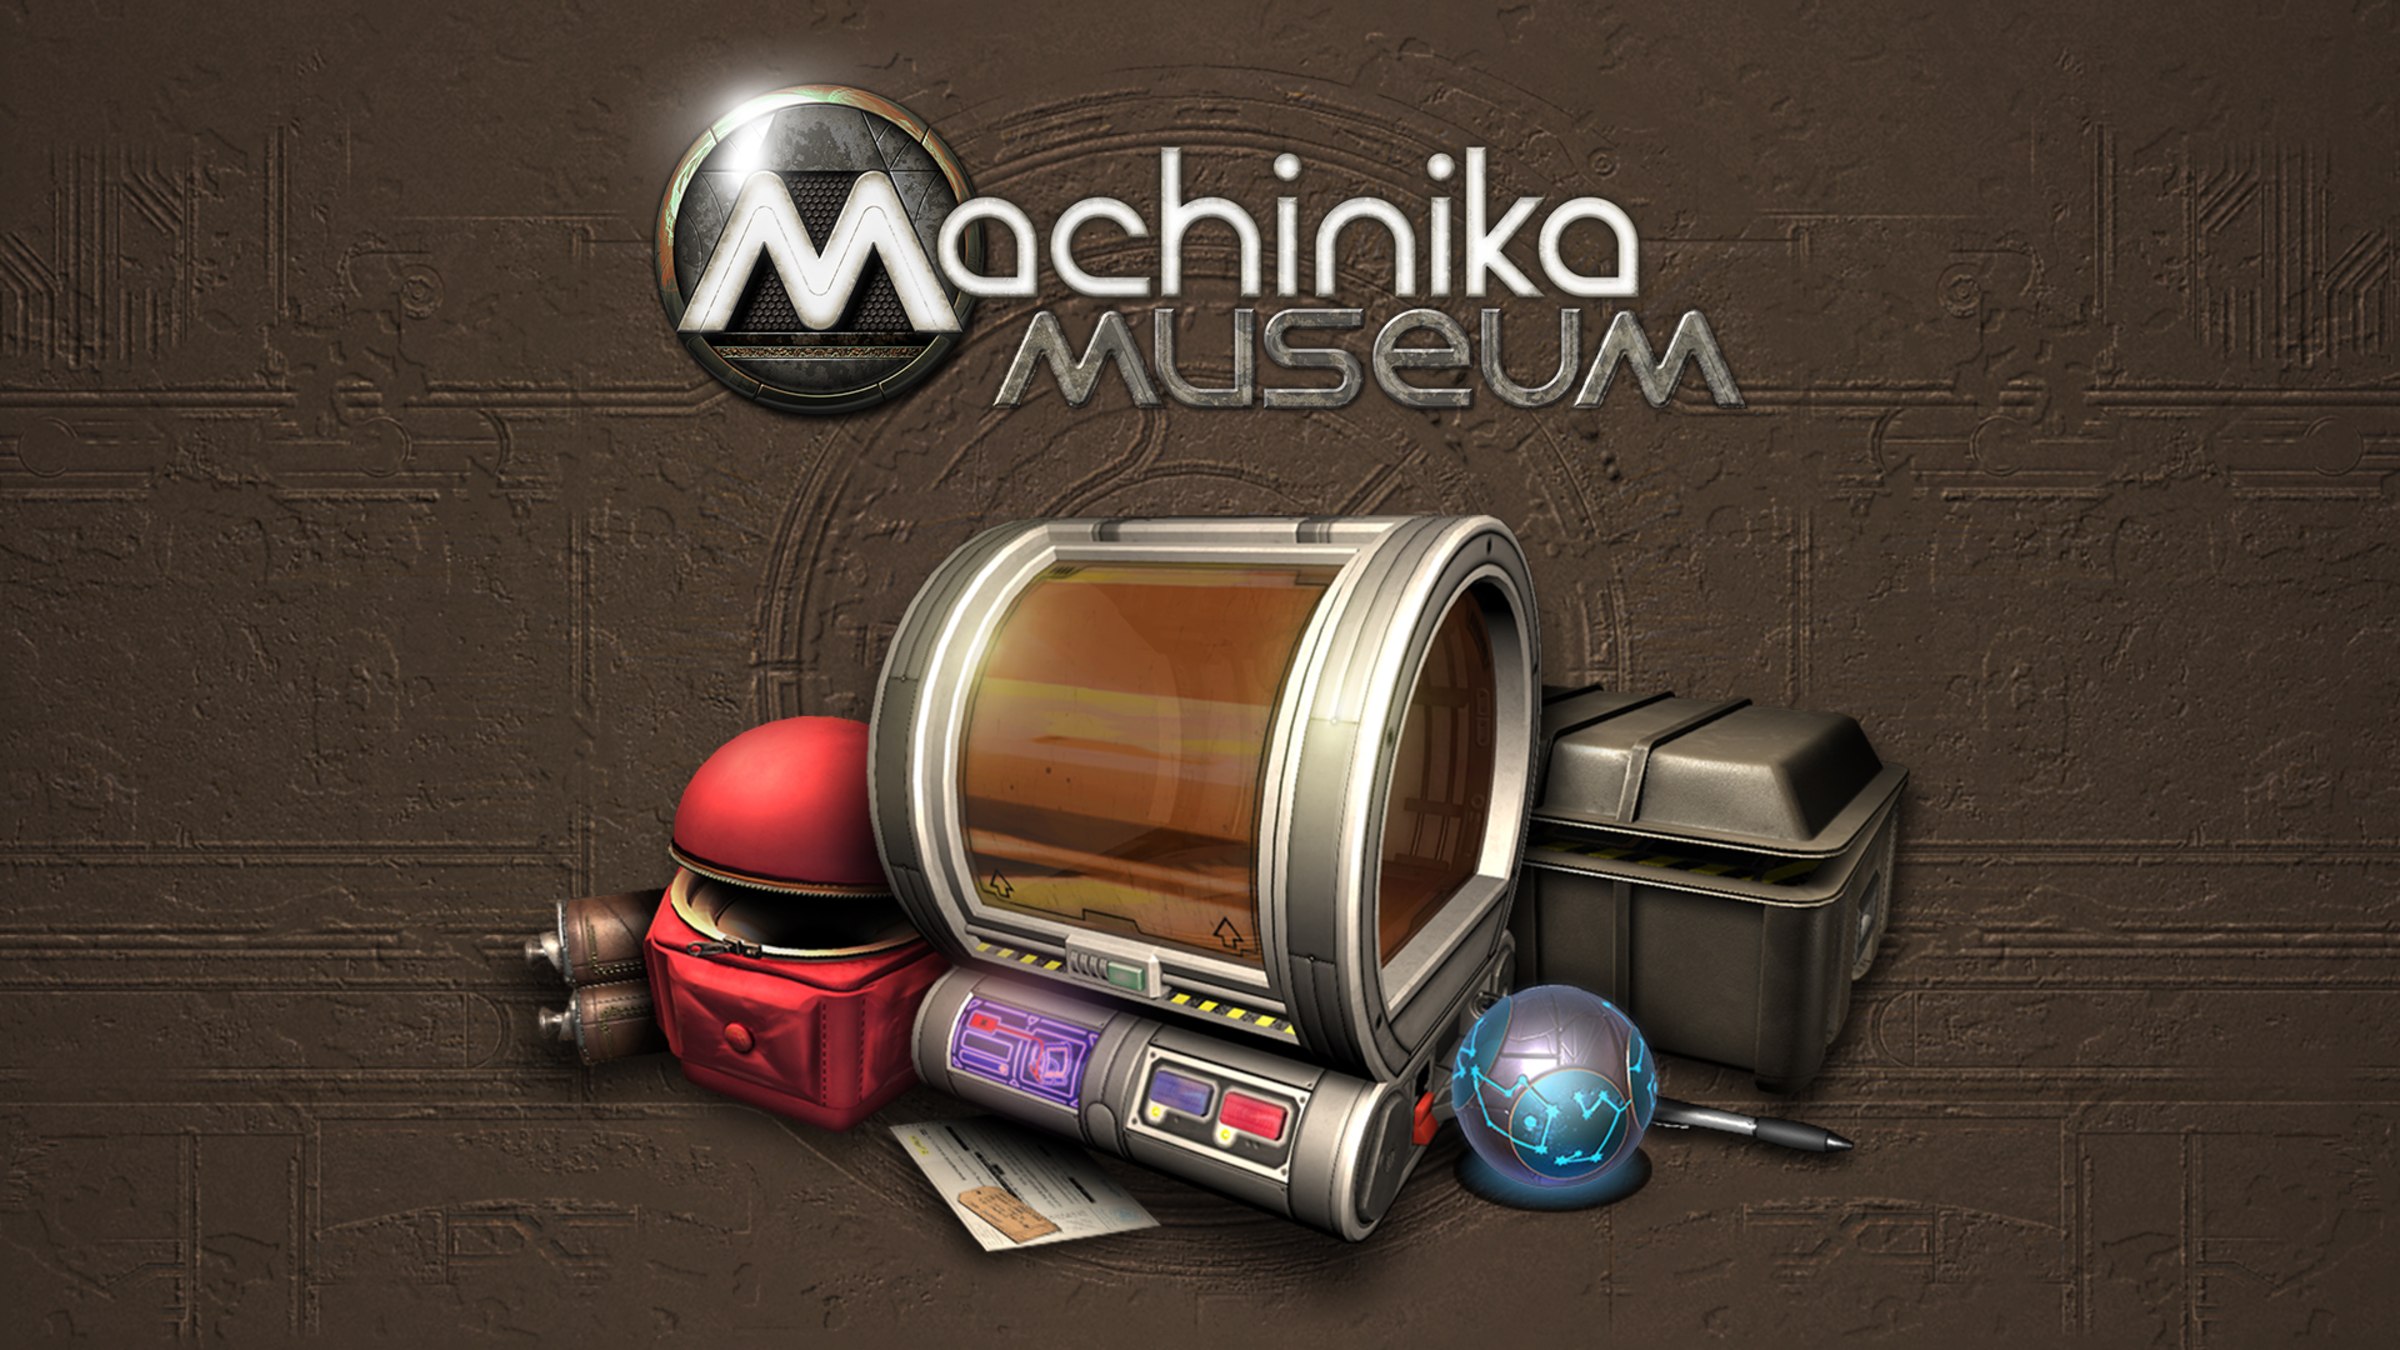 Machinika Museum For Nintendo Switch - Nintendo Official Site